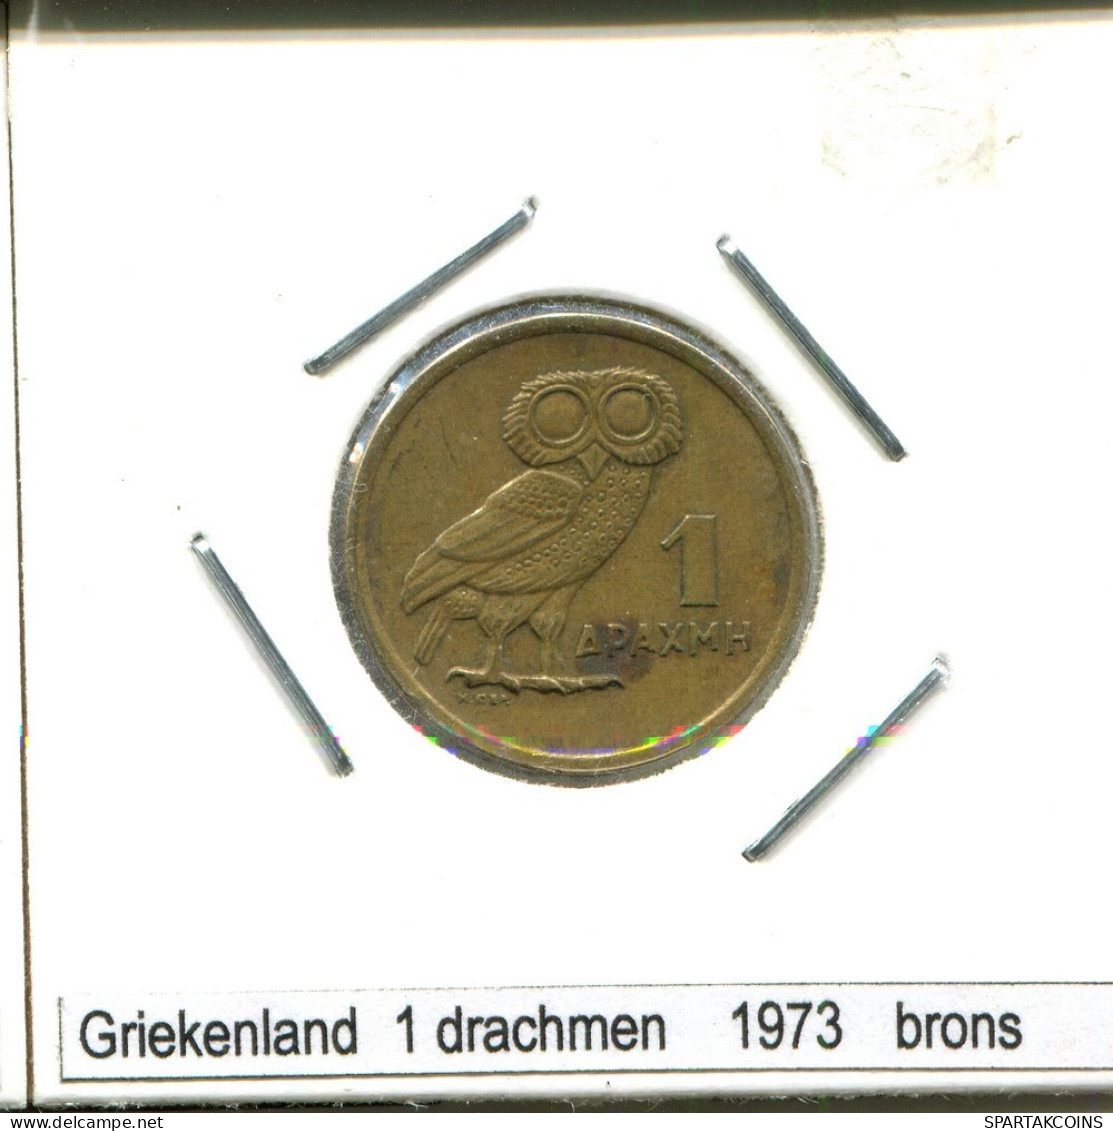 1 DRACHMES 1973 GREECE Coin #AS433.U.A - Griechenland